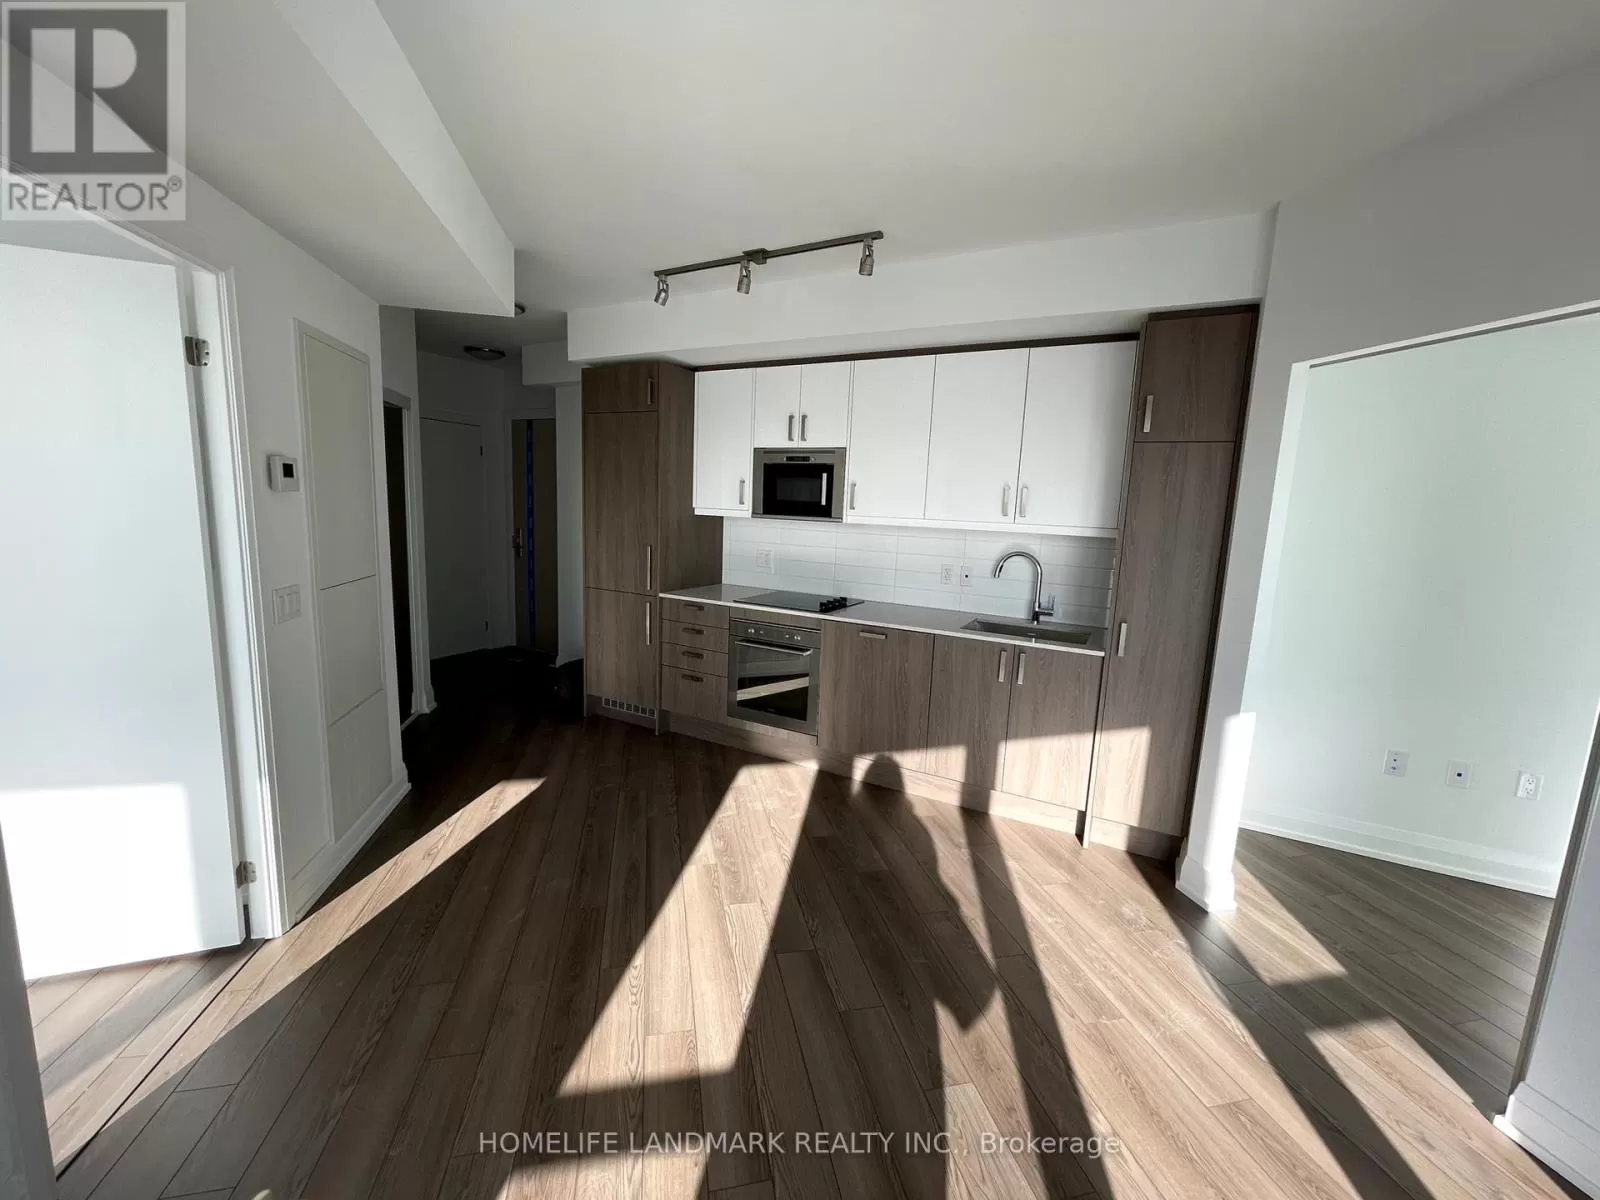 Apartment for rent: 1902 - 77 Mutual Street, Toronto, Ontario M5B 2A9